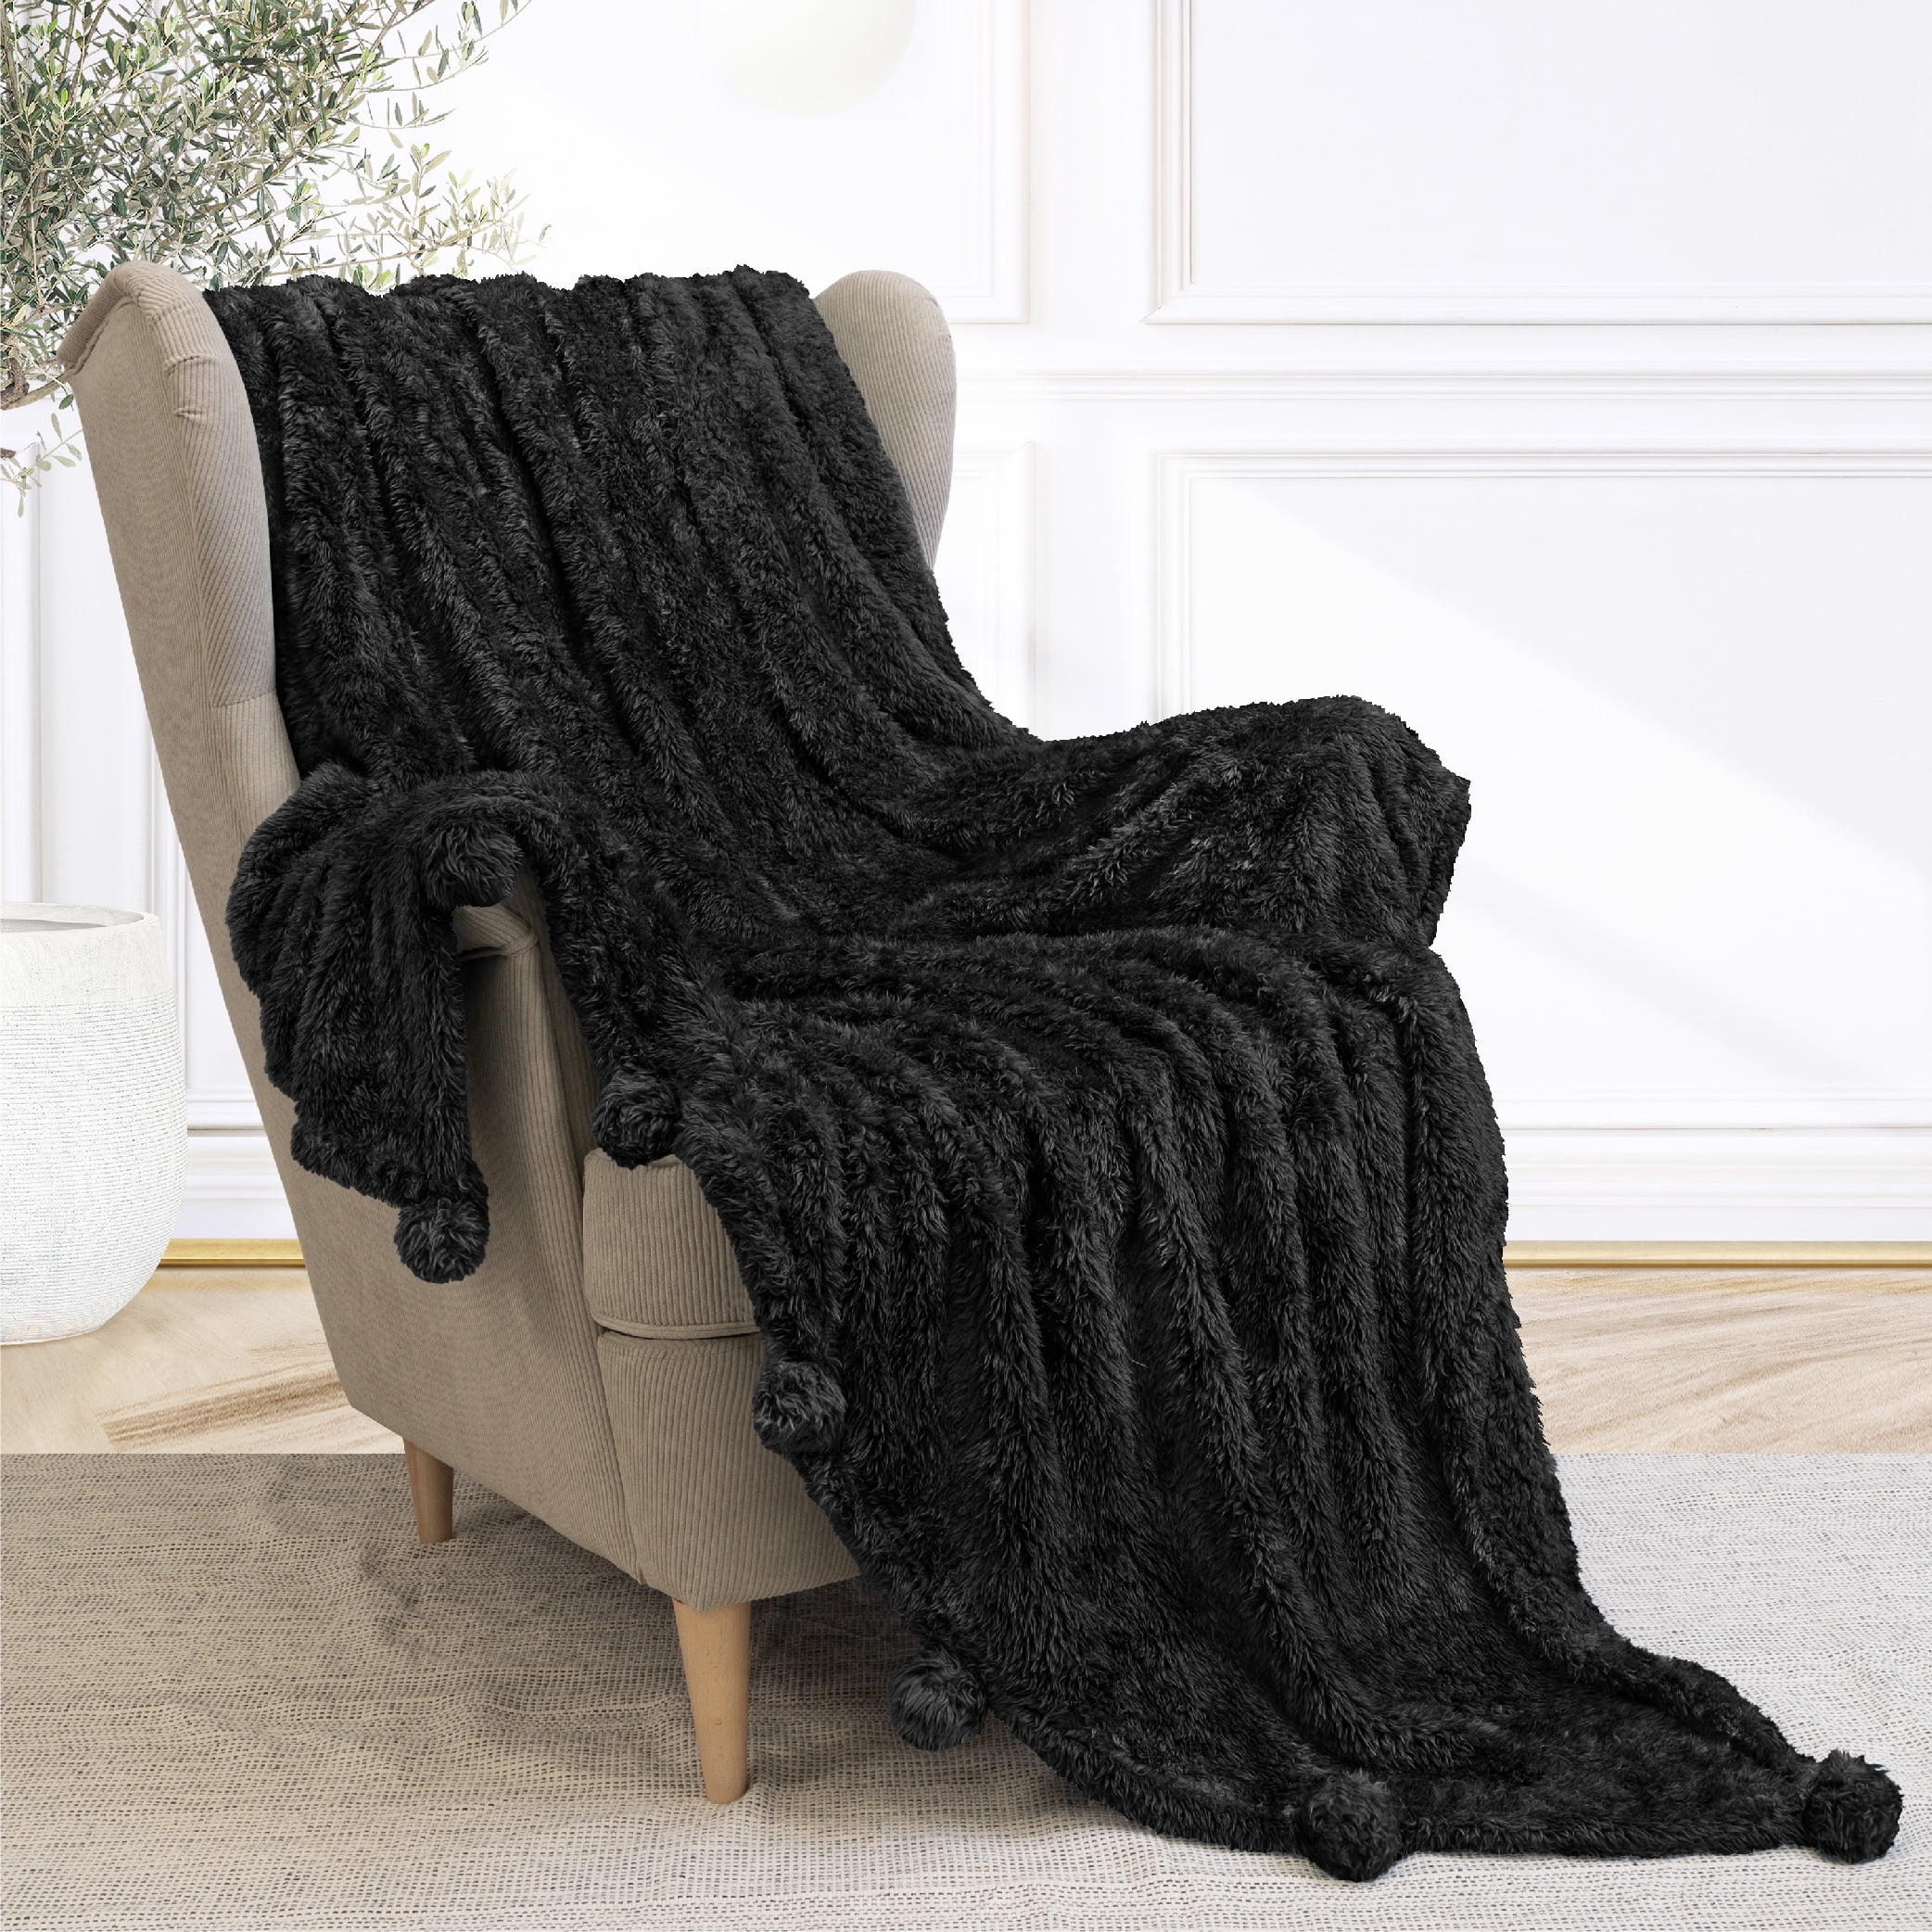 PAVILIA Black Sherpa Throw Blanket with Soft Pom Pom Fringe, Plush Cozy  Warm Blankets for Couch Bed Sofa, Fuzzy Fleece Throw with Pompom,  Lightweight Fluffy, Black 50x60 in 